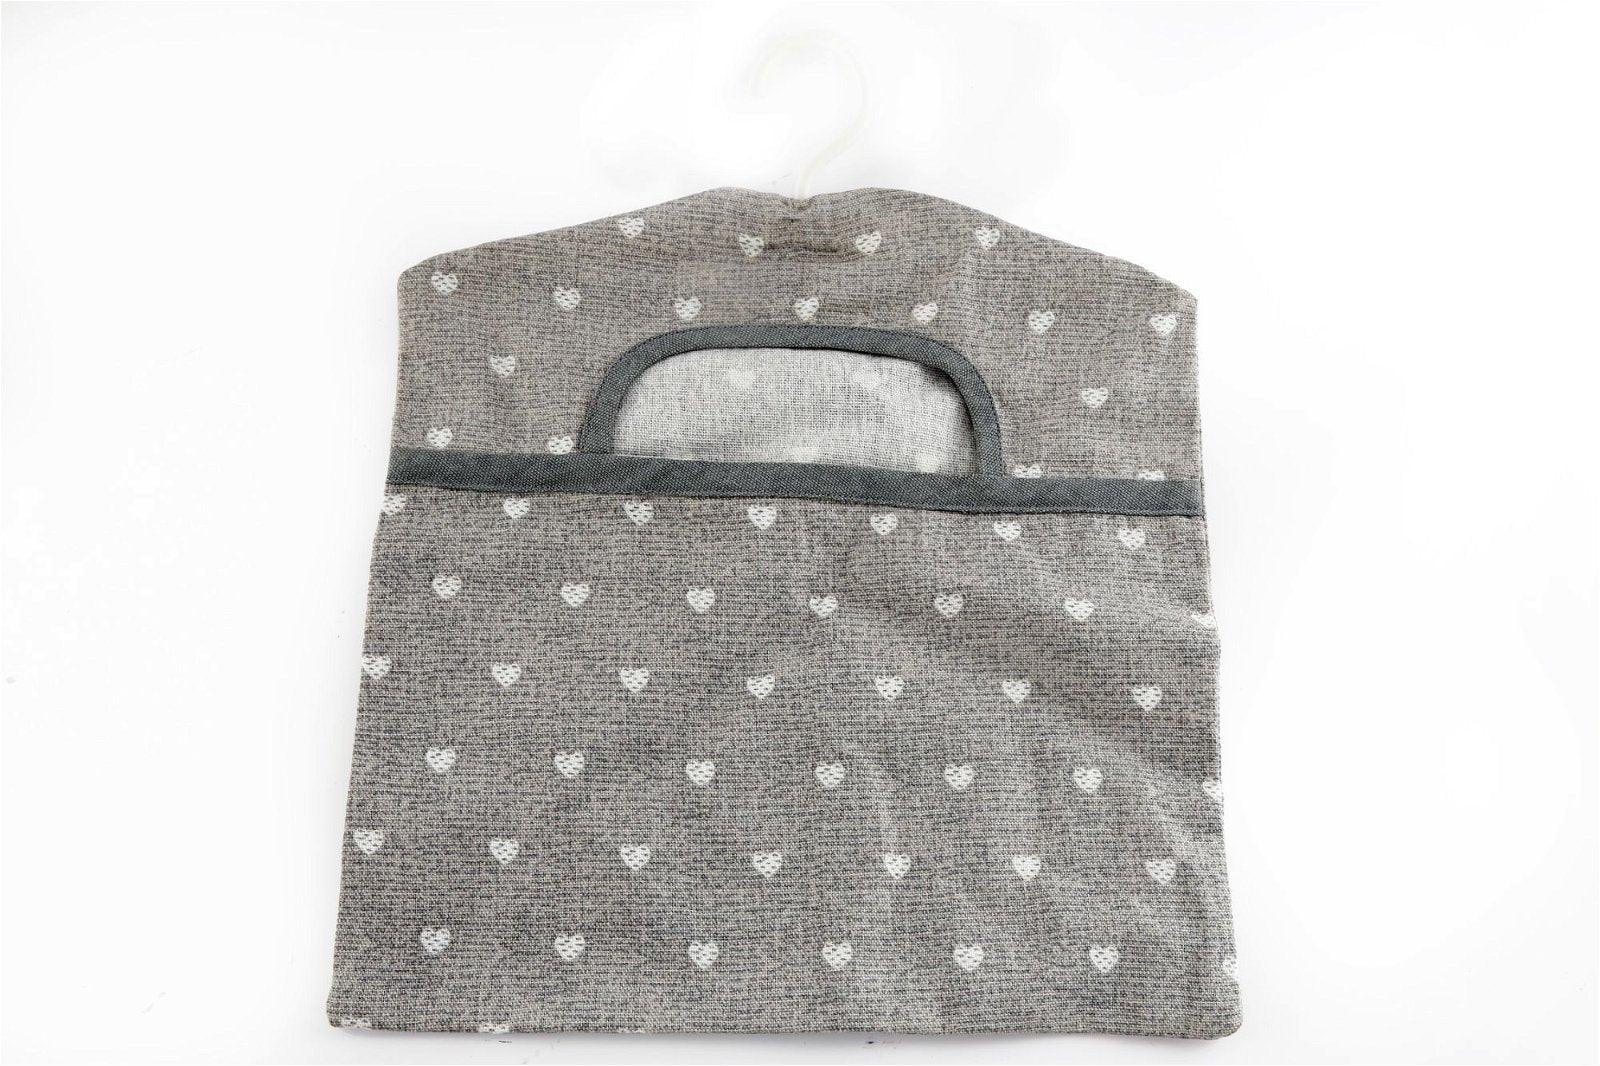 Cotton Peg Bag With Grey Hearts Design-Decorative Kitchen Items